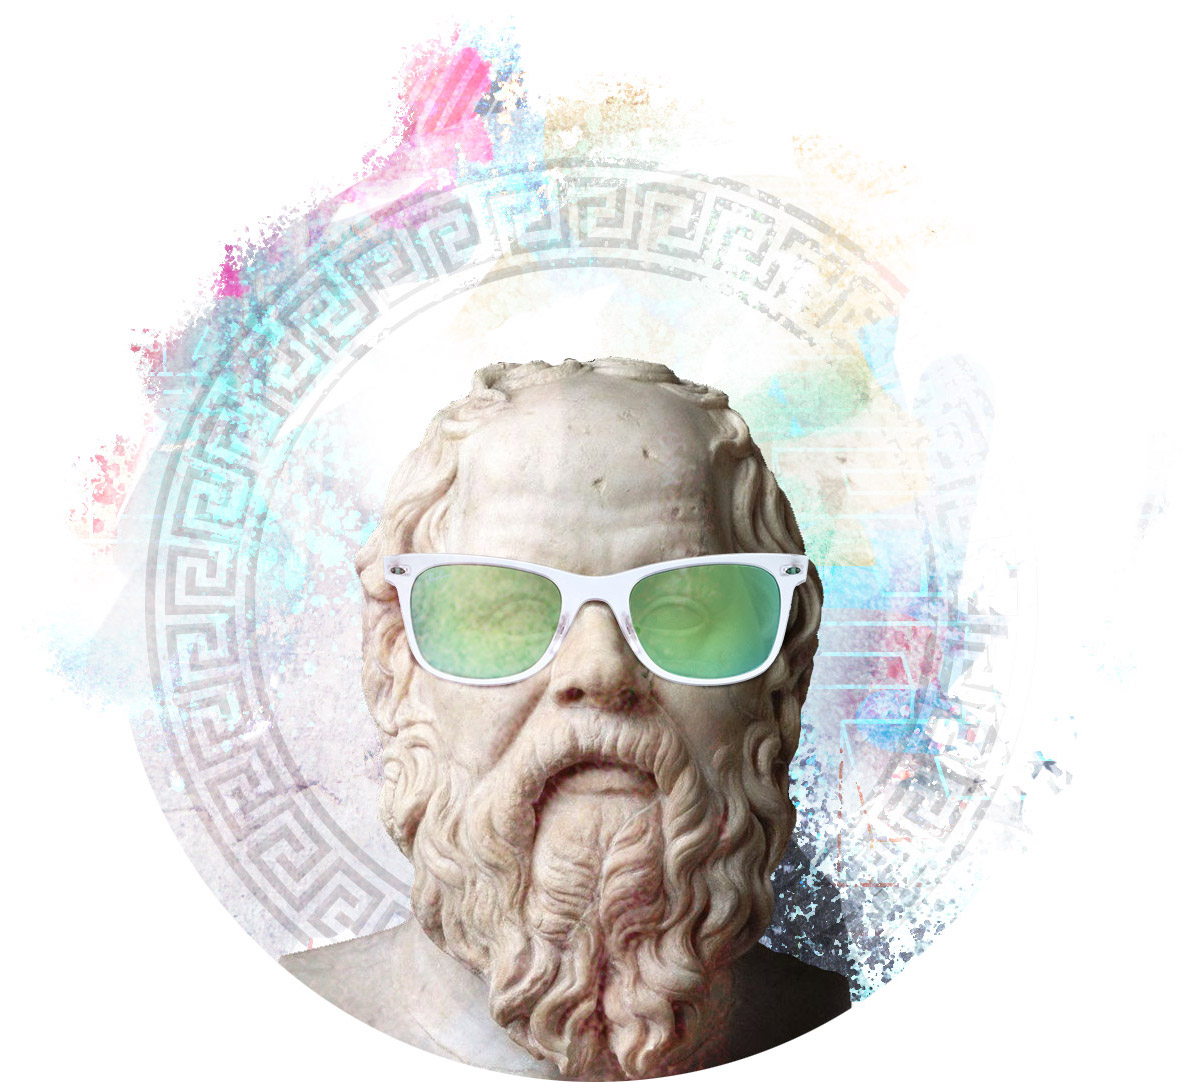 Socrates wearing sunglasses